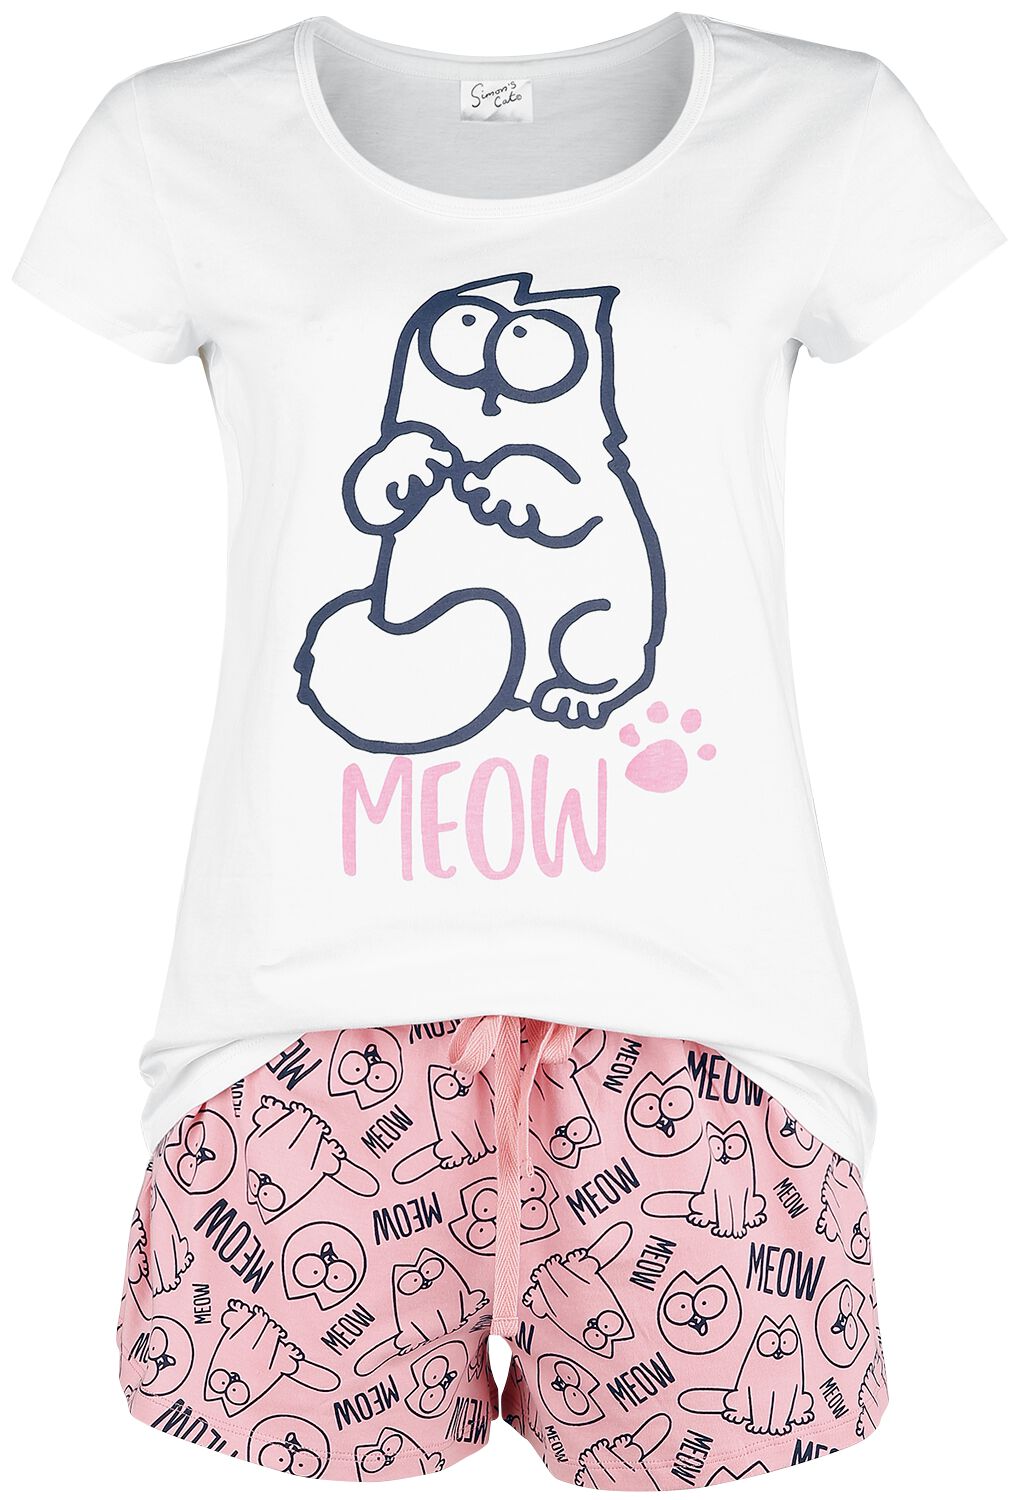 simons cat schlafanzug - meow - m bis 3xl - fÃ¼r damen - grÃ¶ÃŸe m - - emp exklusives merchandise! weiÃŸ/rosa donna